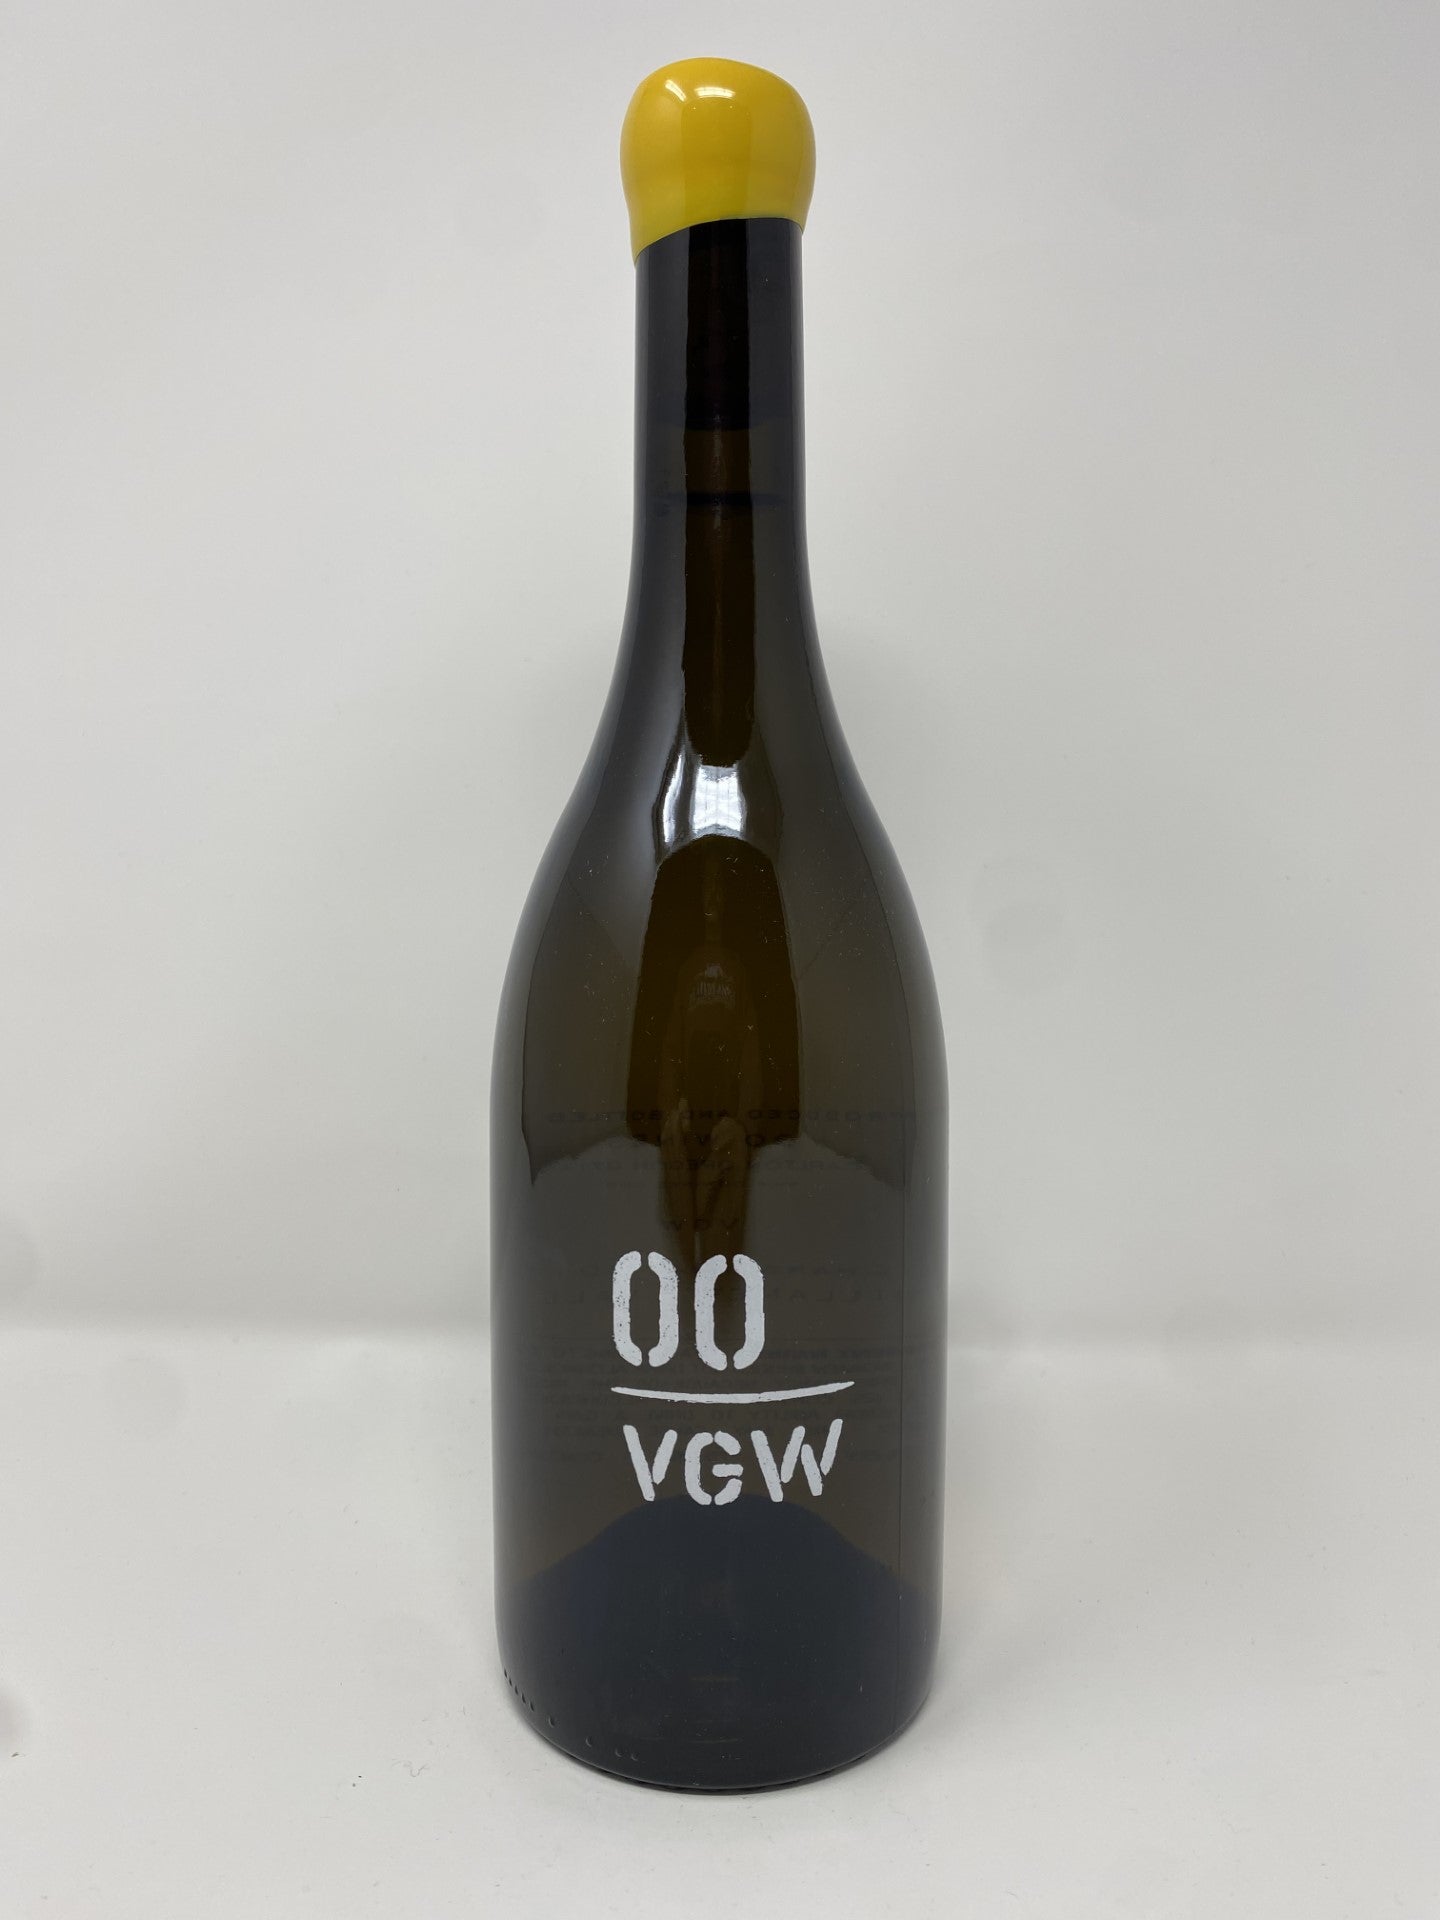 00 Wines Chardonnay VGW 2017